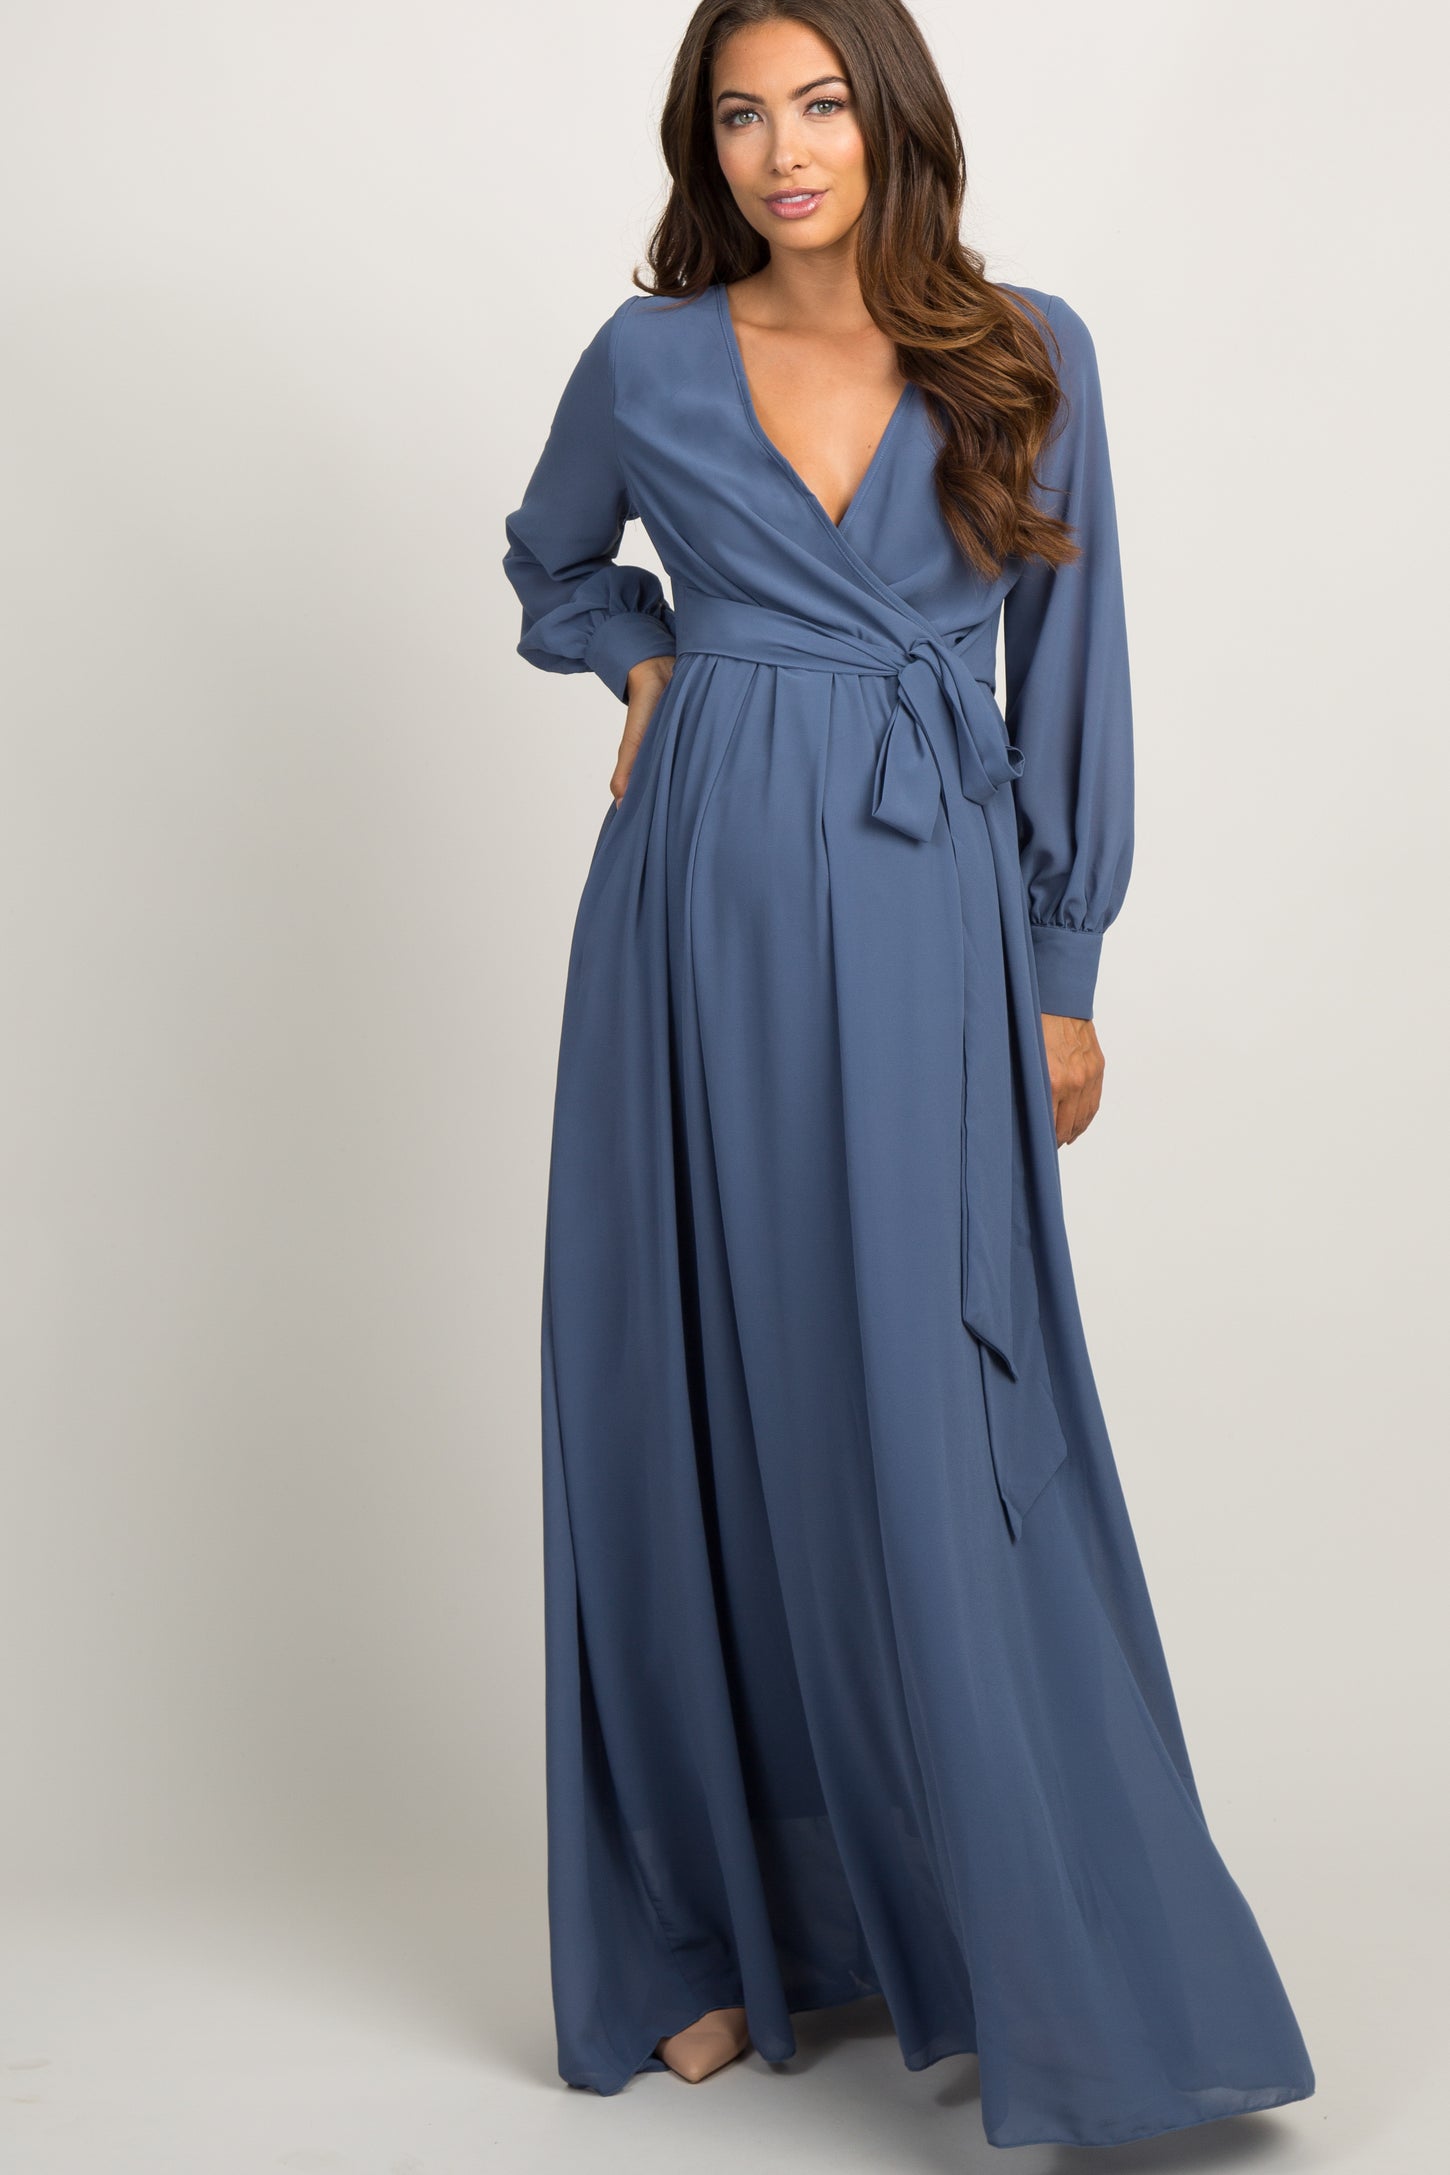 Blue Chiffon Long Sleeve Pleated Maternity Maxi Dress